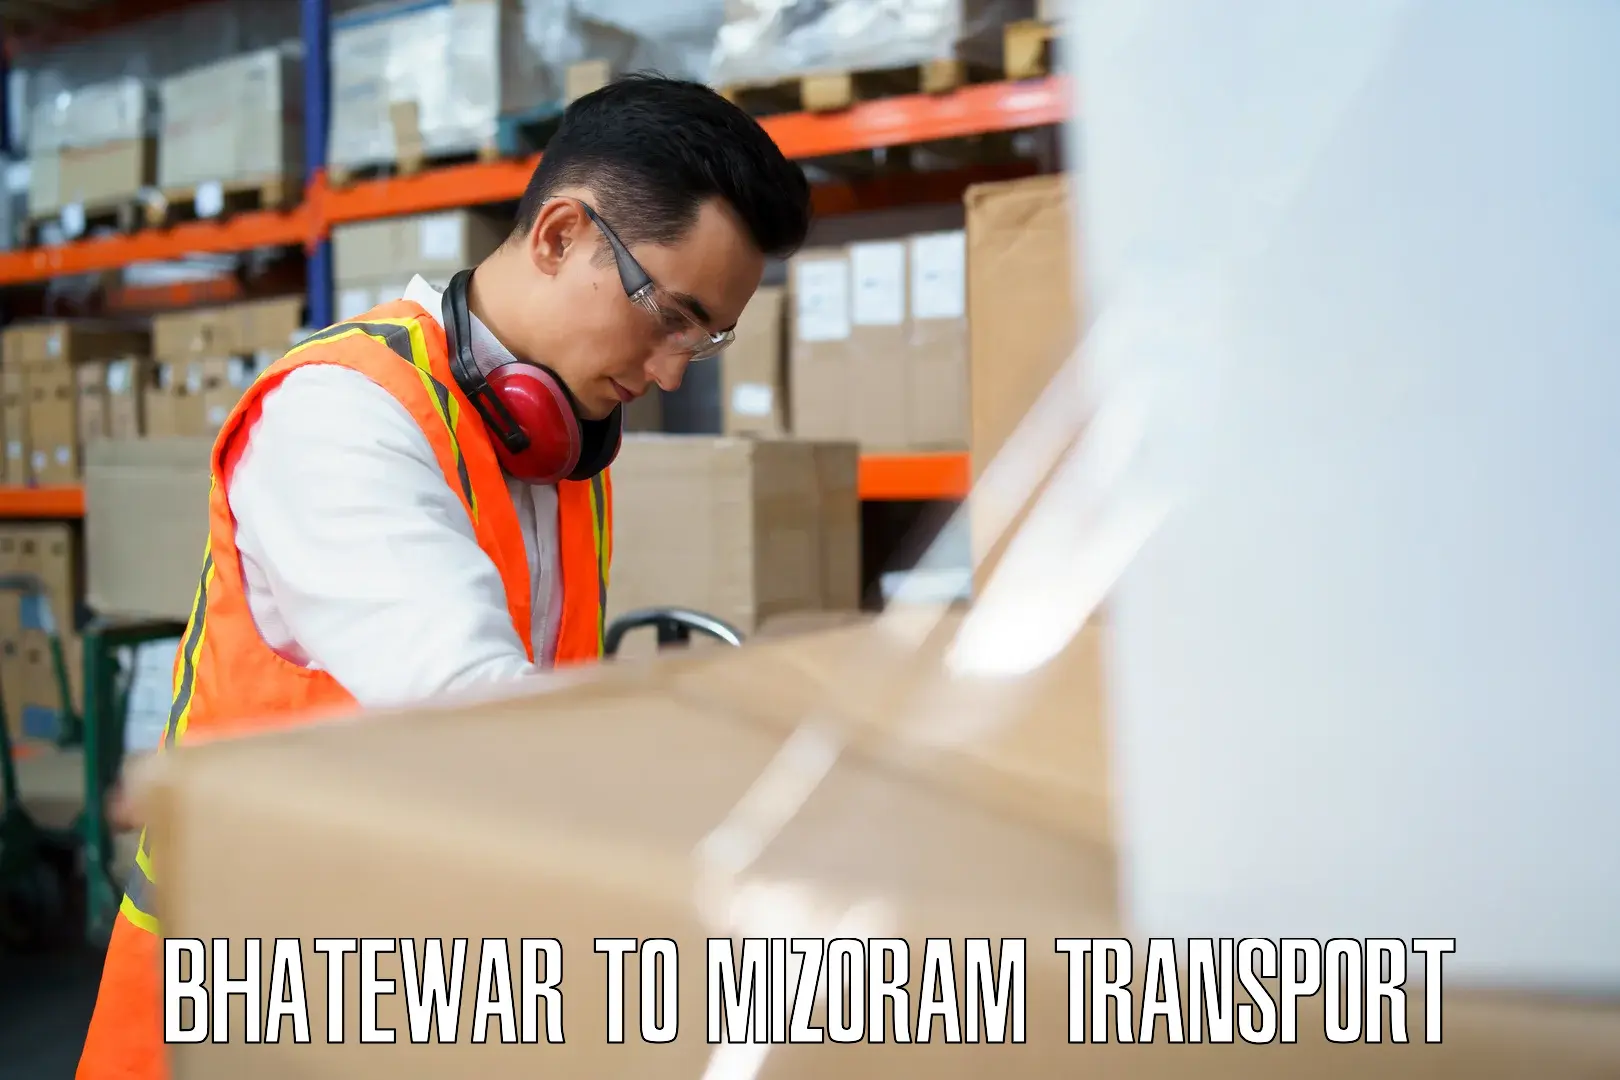 Transport in sharing Bhatewar to Mizoram